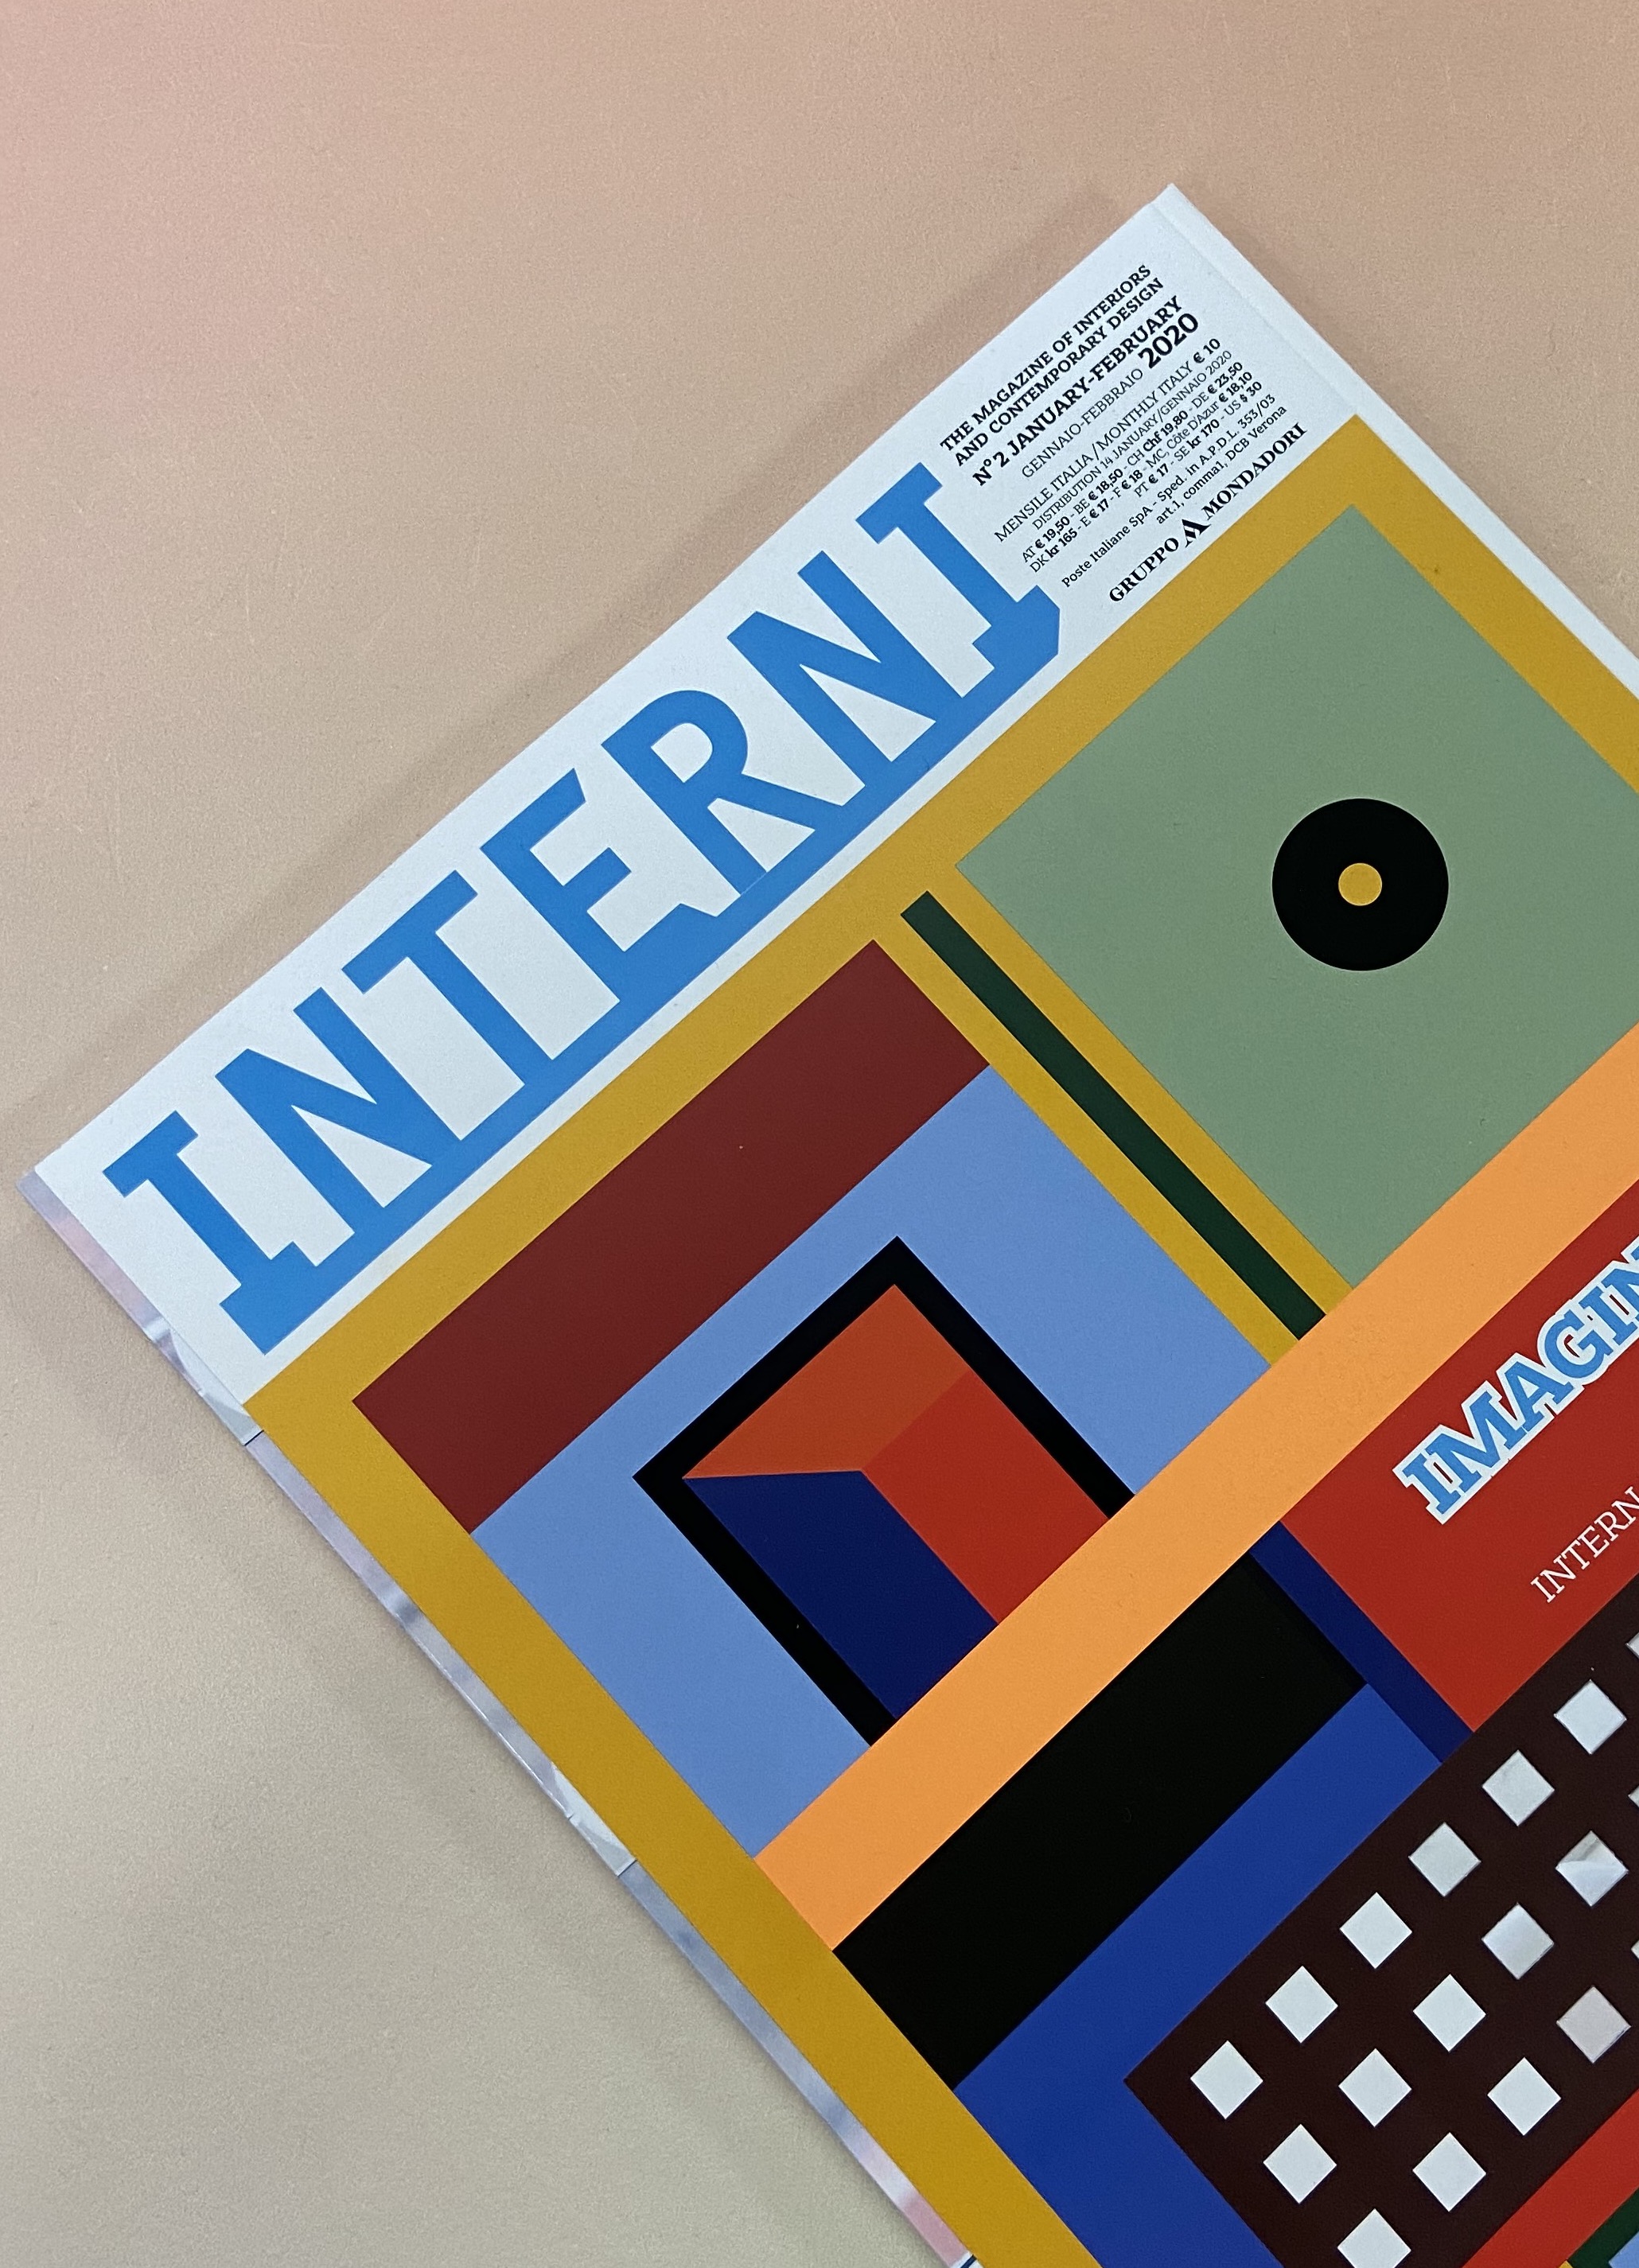 Interni magazine - Superfici creative